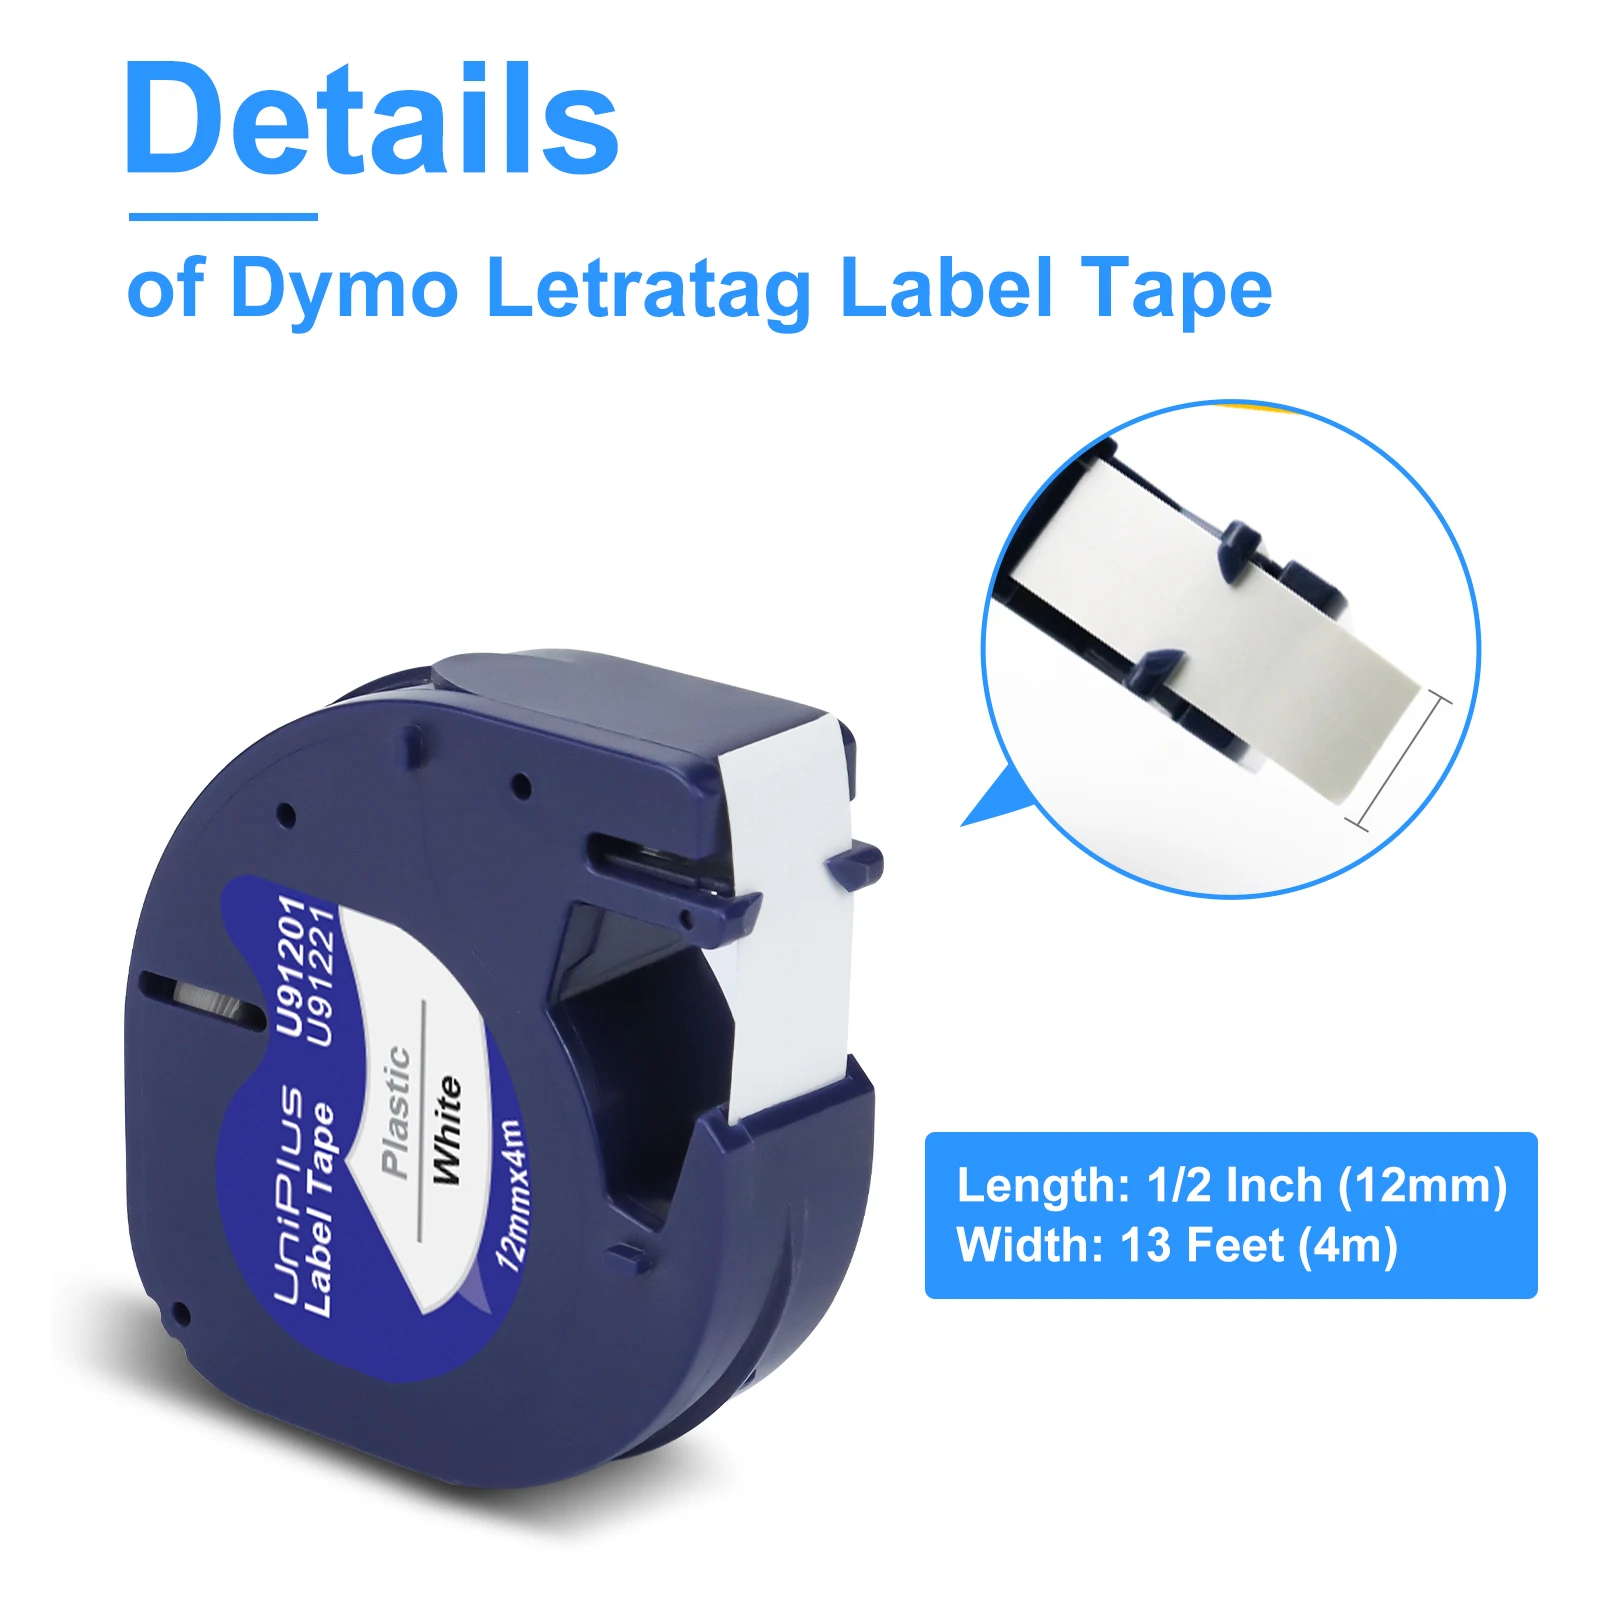 Dymo LT100H Label Maker Set Portable Adhesive Sticker Printer Dymo LT 100H Label Printer Dymo Letratag 100H Labeling Machine